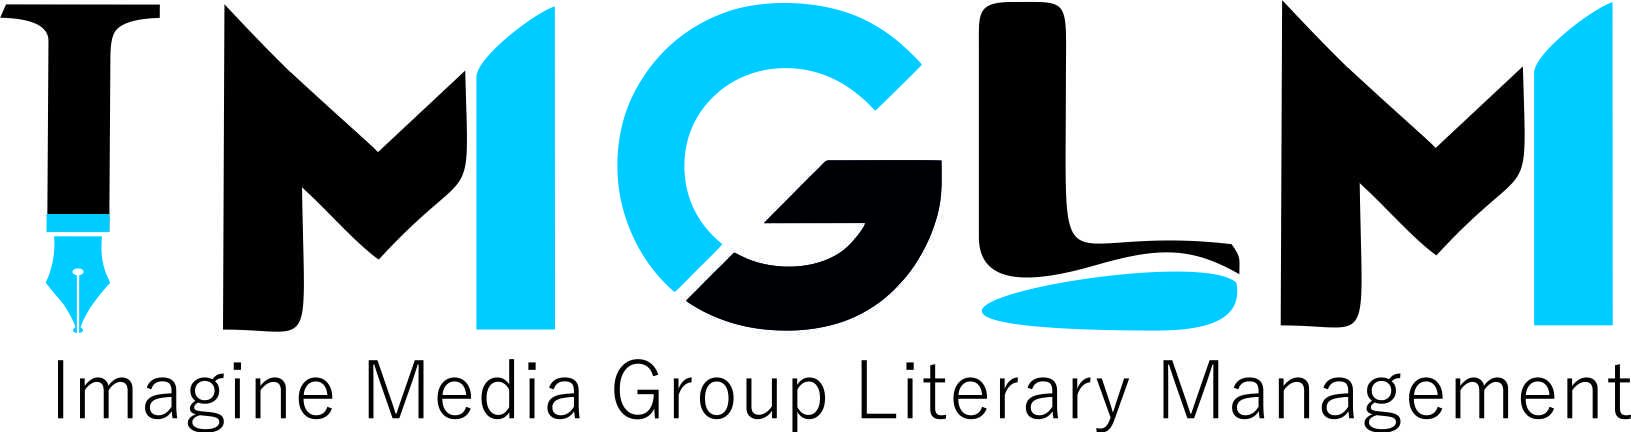 Imagine Media Group Literary Management